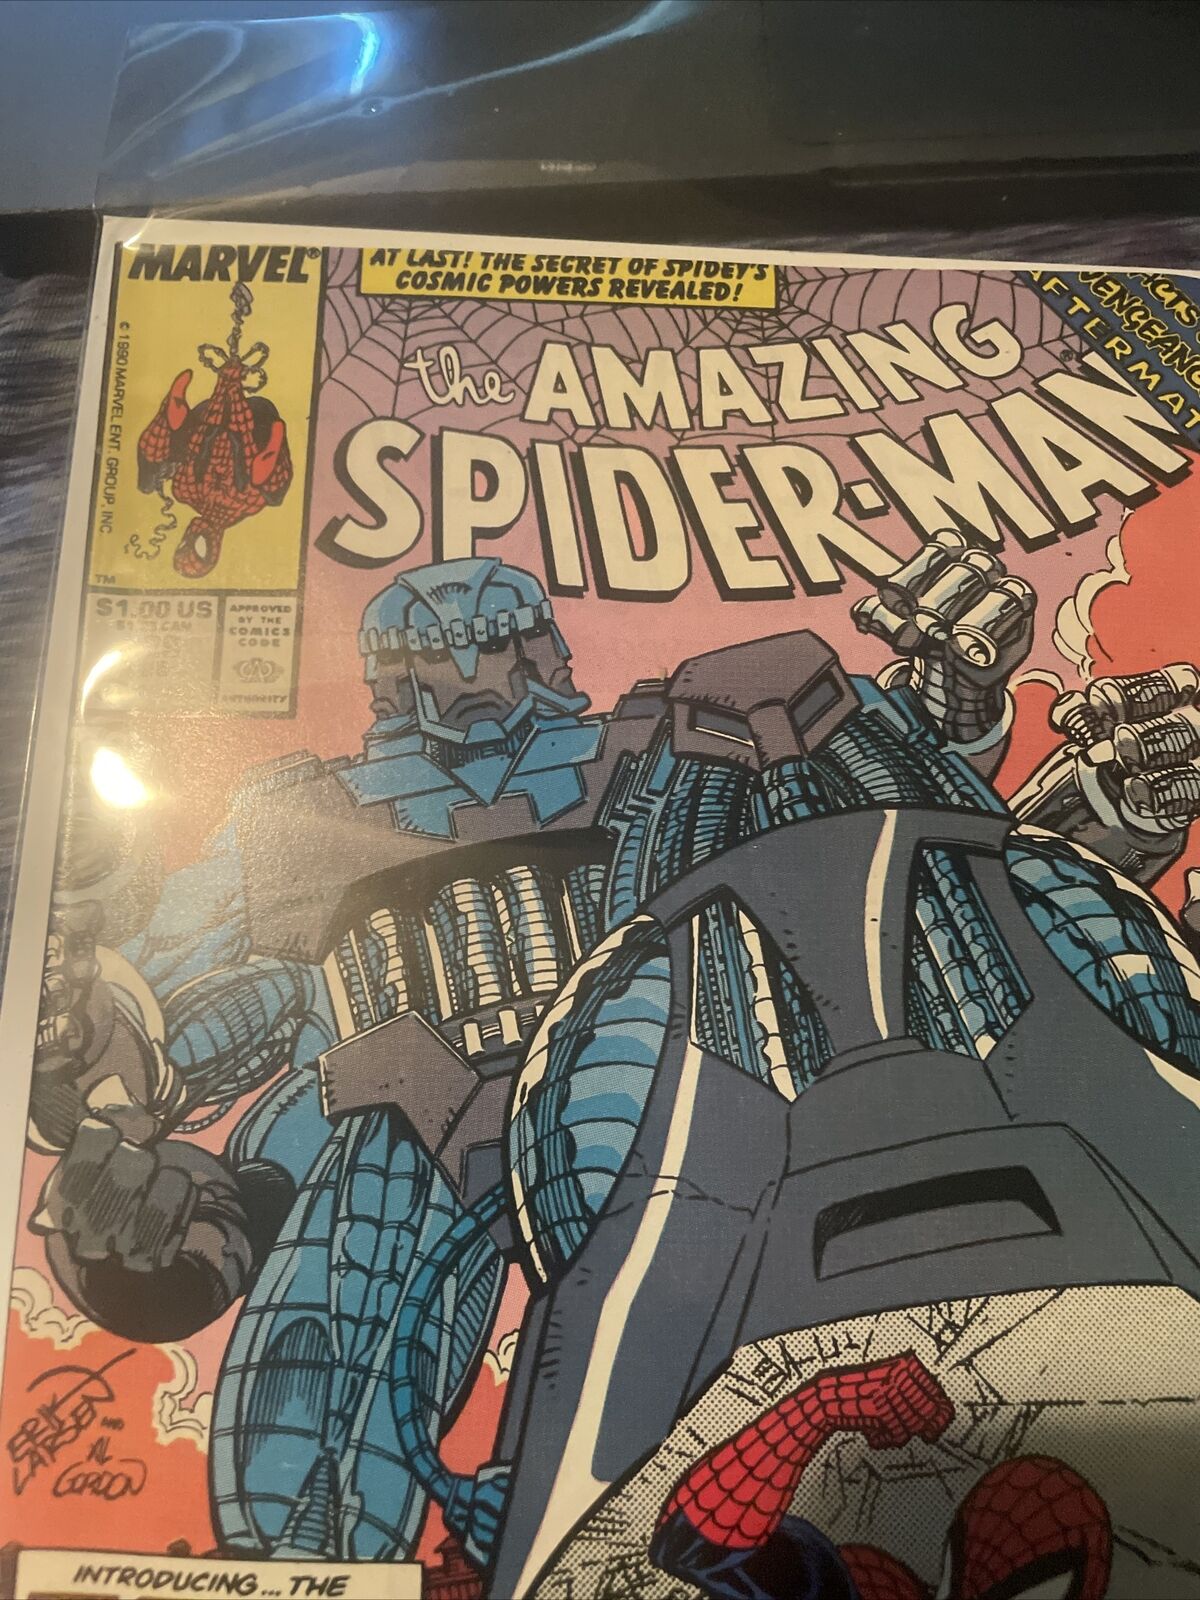 The Amazing Spider-Man #329 (Marvel Comics February 1990)